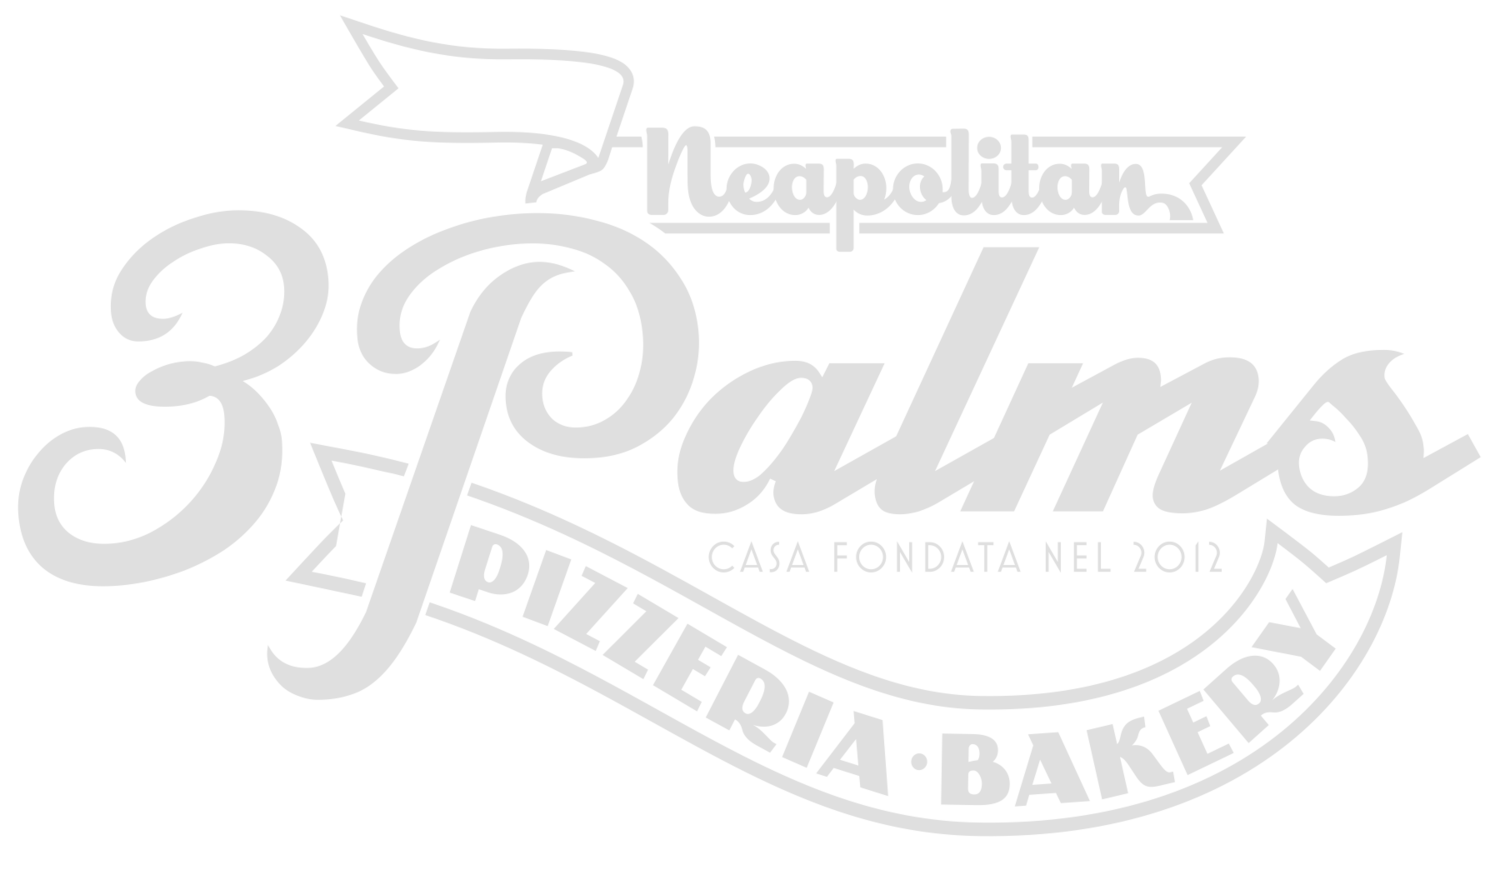 3 Palms Pizzeria & Italian Bakery